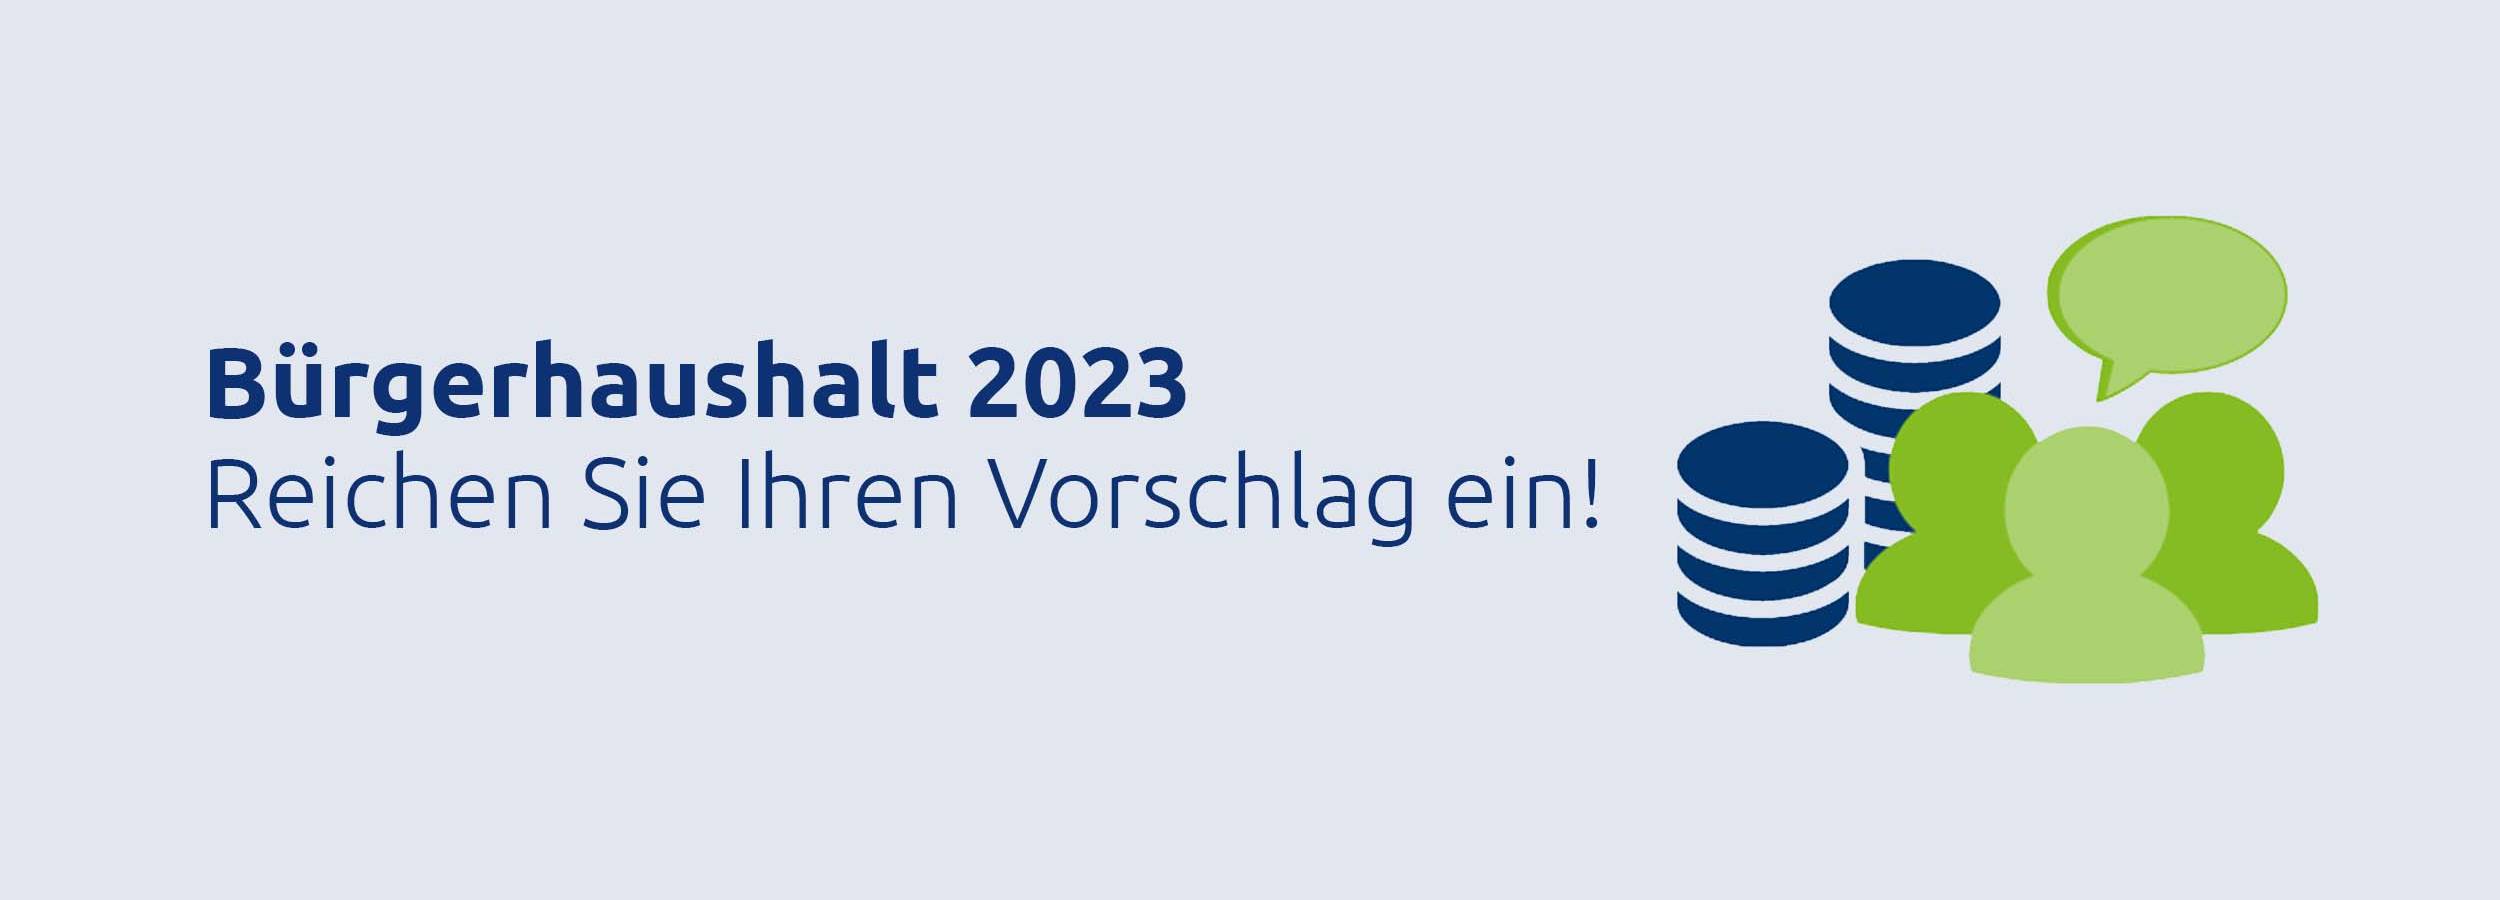 Bürgerhaushalt 2023 ©Stadt Meißen